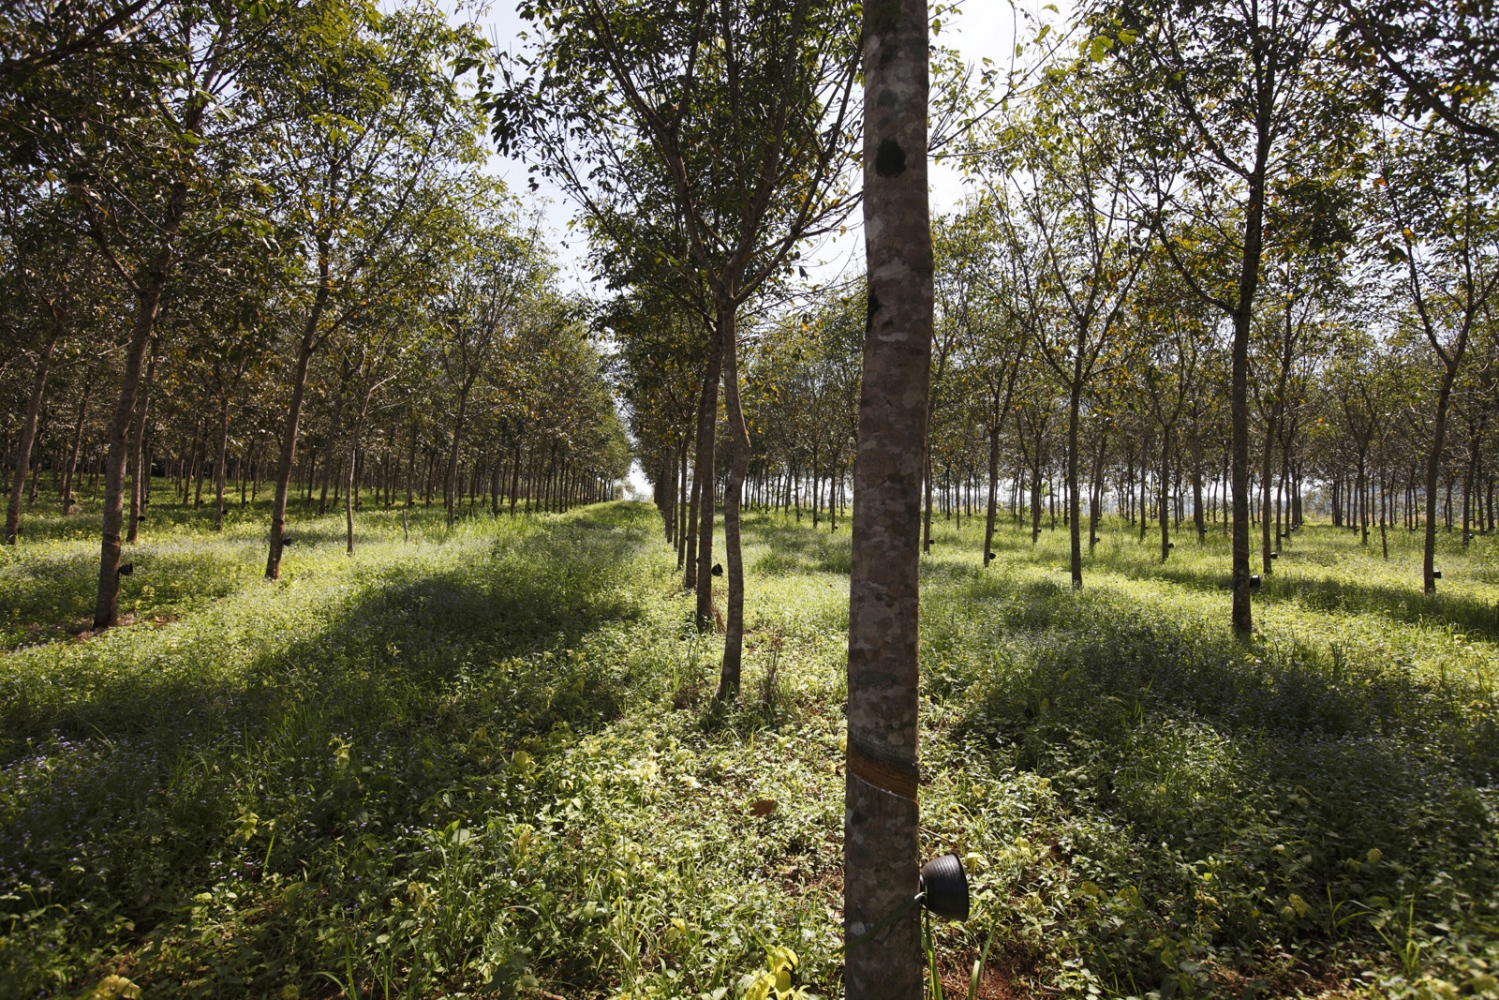 CAMBODIA'S CARDAMOM FOREST